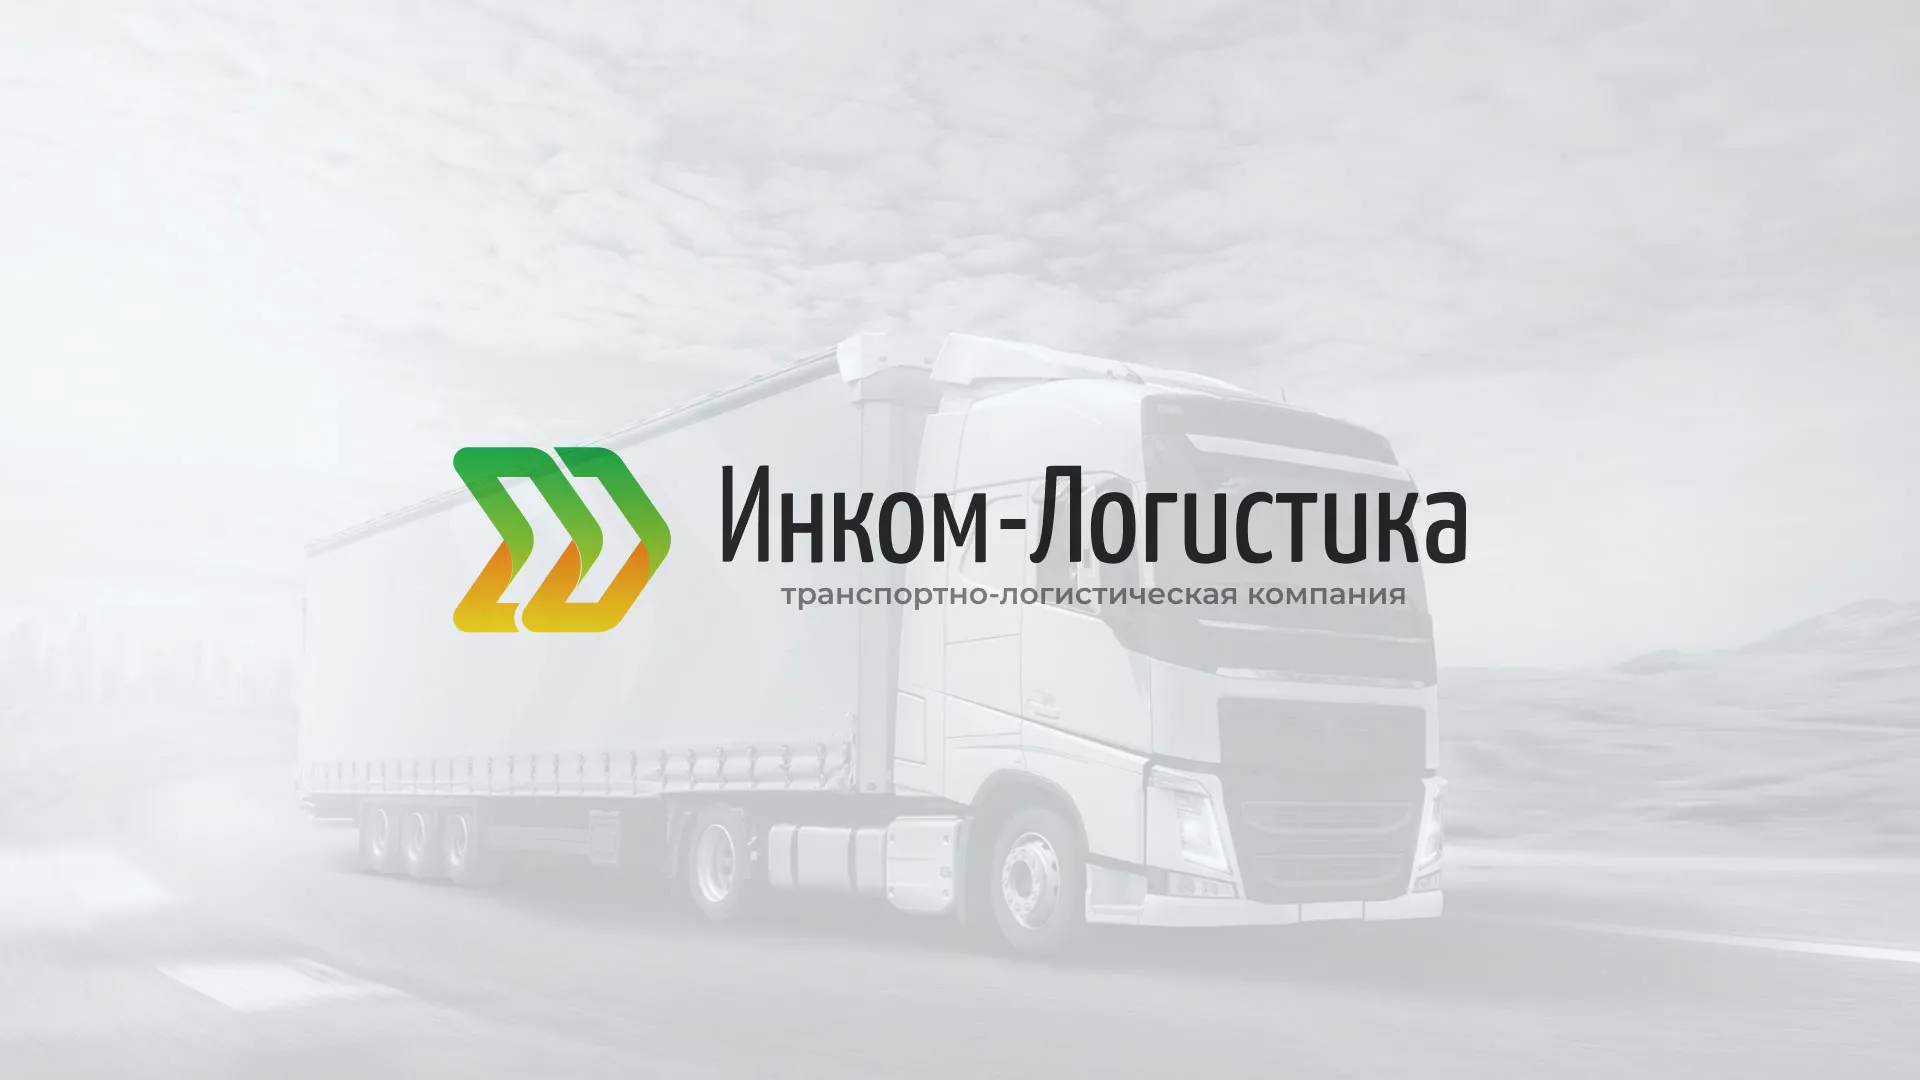 Разработка логотипа и сайта компании «Инком-Логистика» в Калининграде